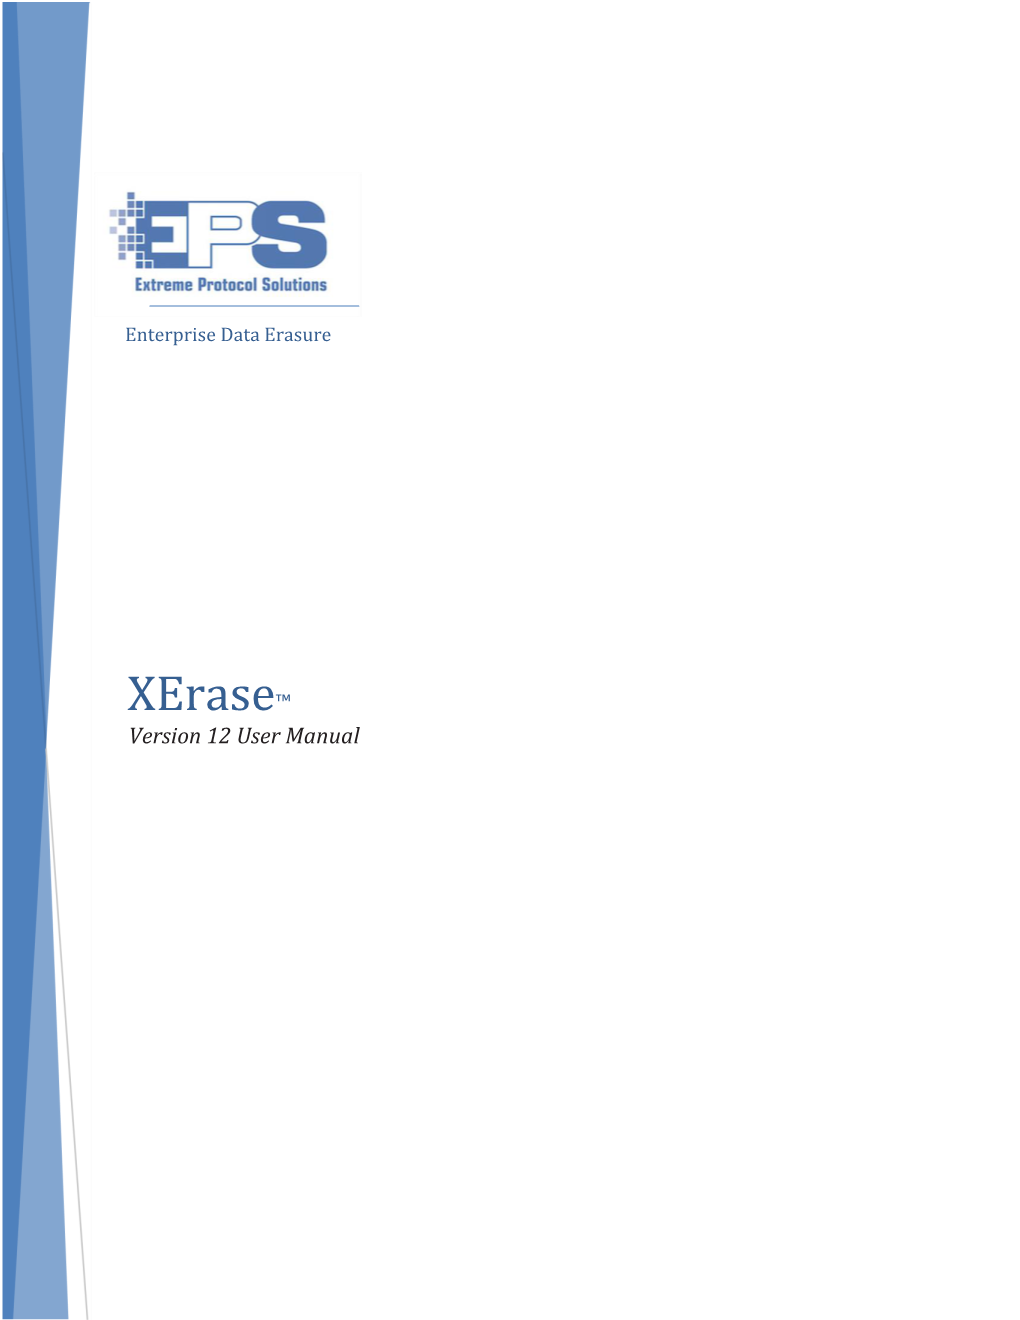 Xerase™ Version 12 User Manual